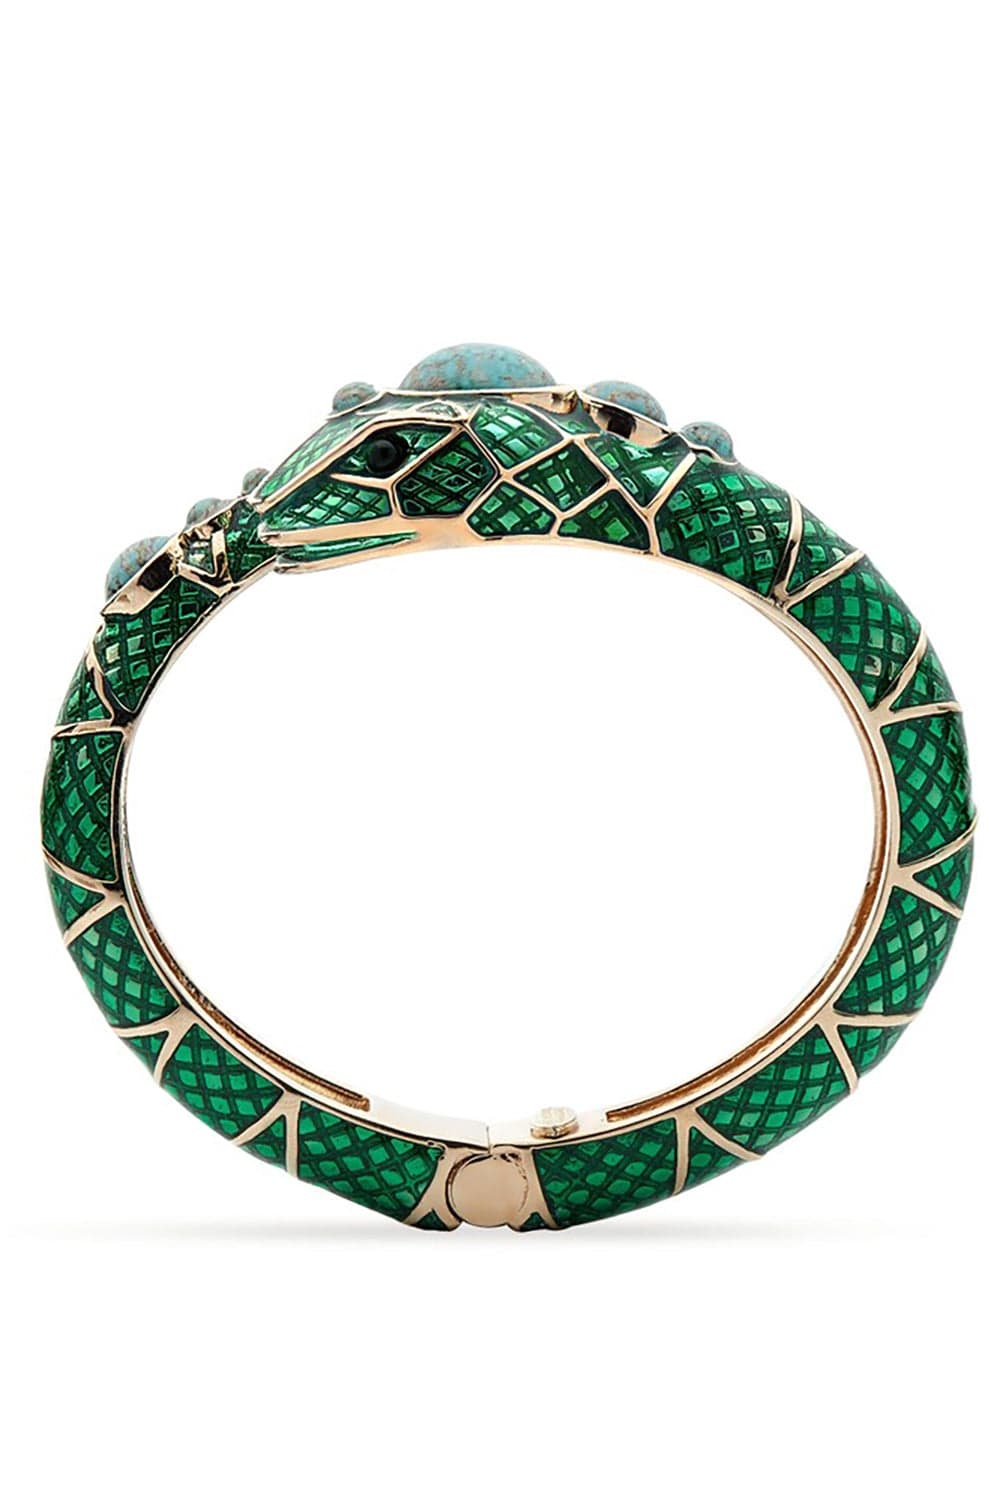 Serpente Bangle Bracelet - Emerald - 1